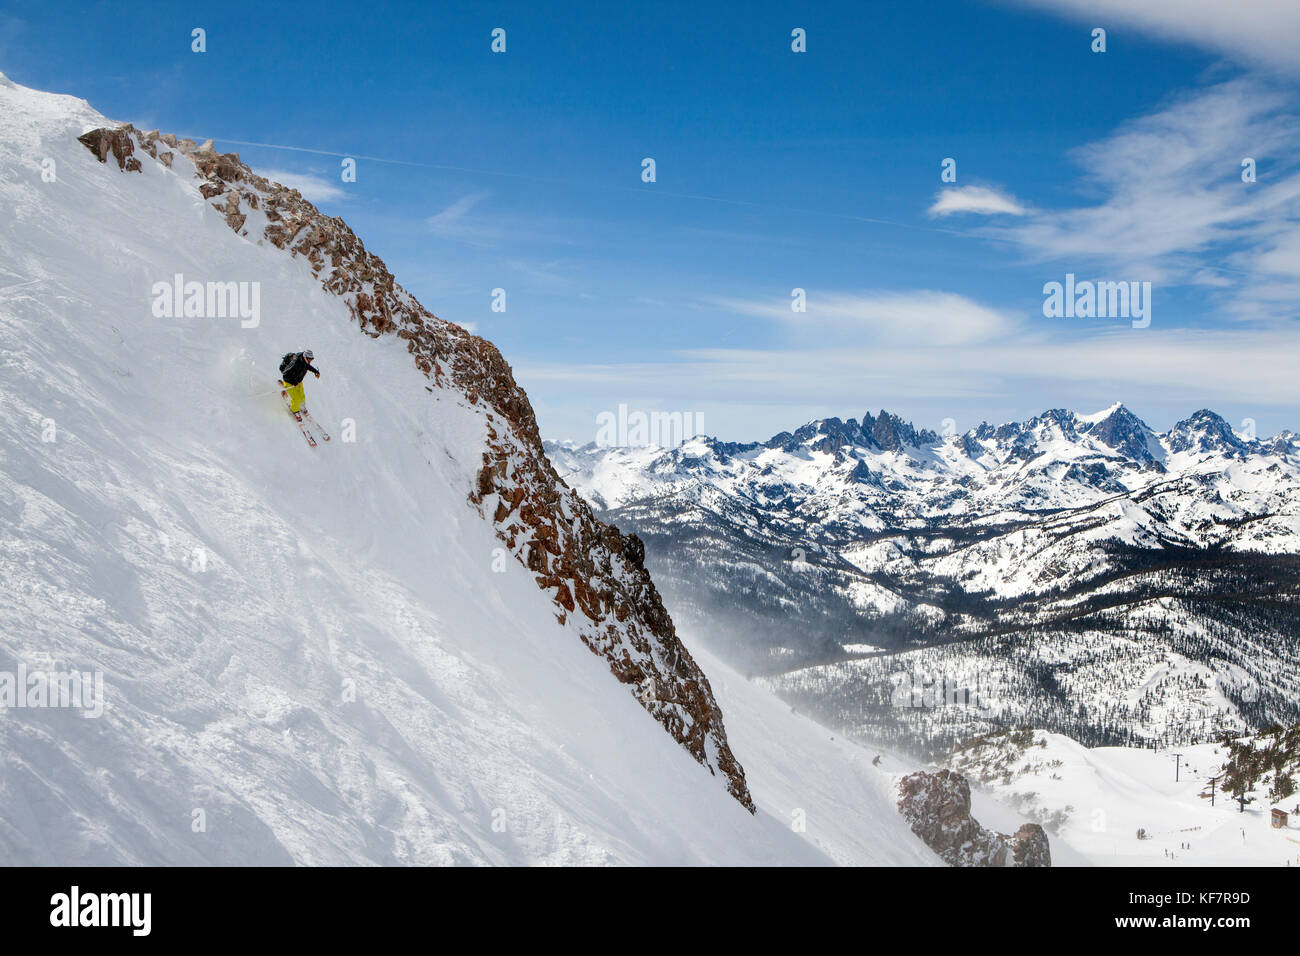 USA, California, Mammoth, USA, California, Mammoth, a skier carves their way down a run at Mammoth Ski Resort Stock Photo